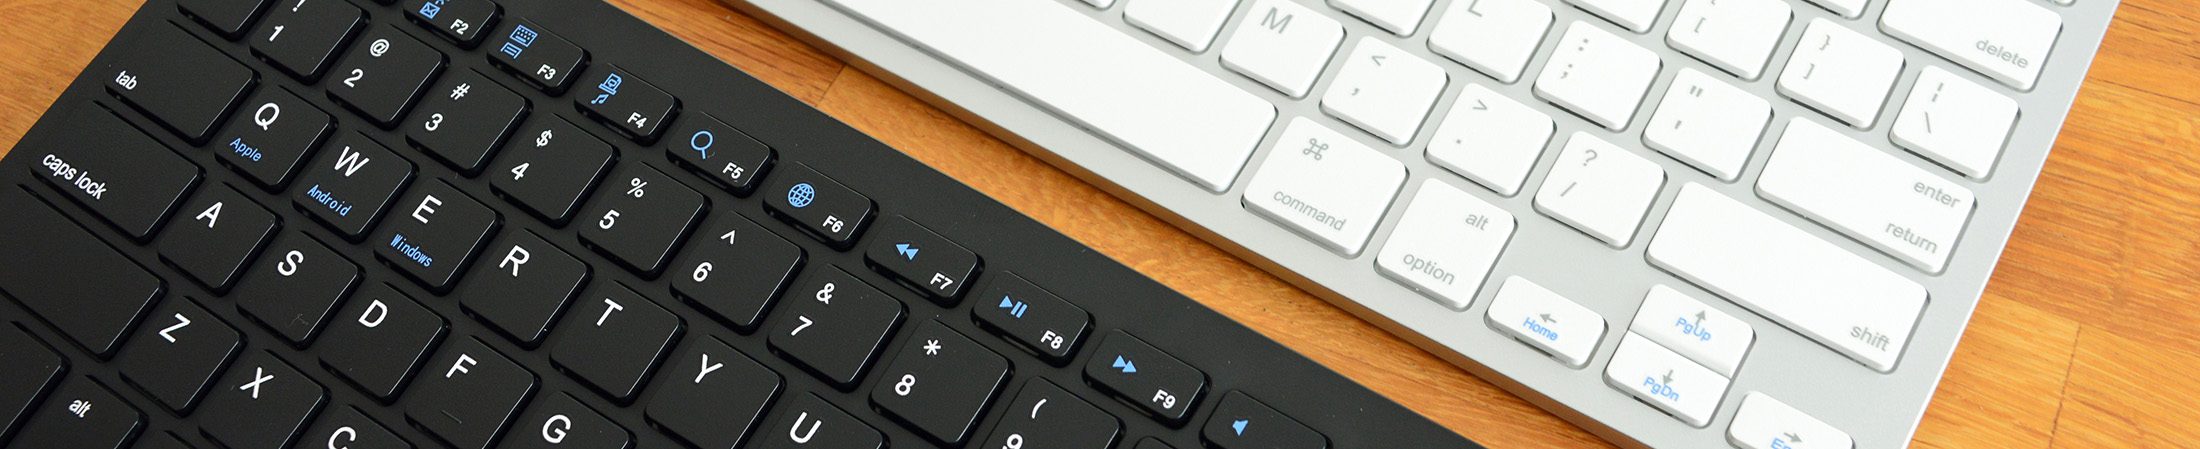 Ipad toetsenbord bestellen draadloos met bluetooth via ipad-toetsenborden.com